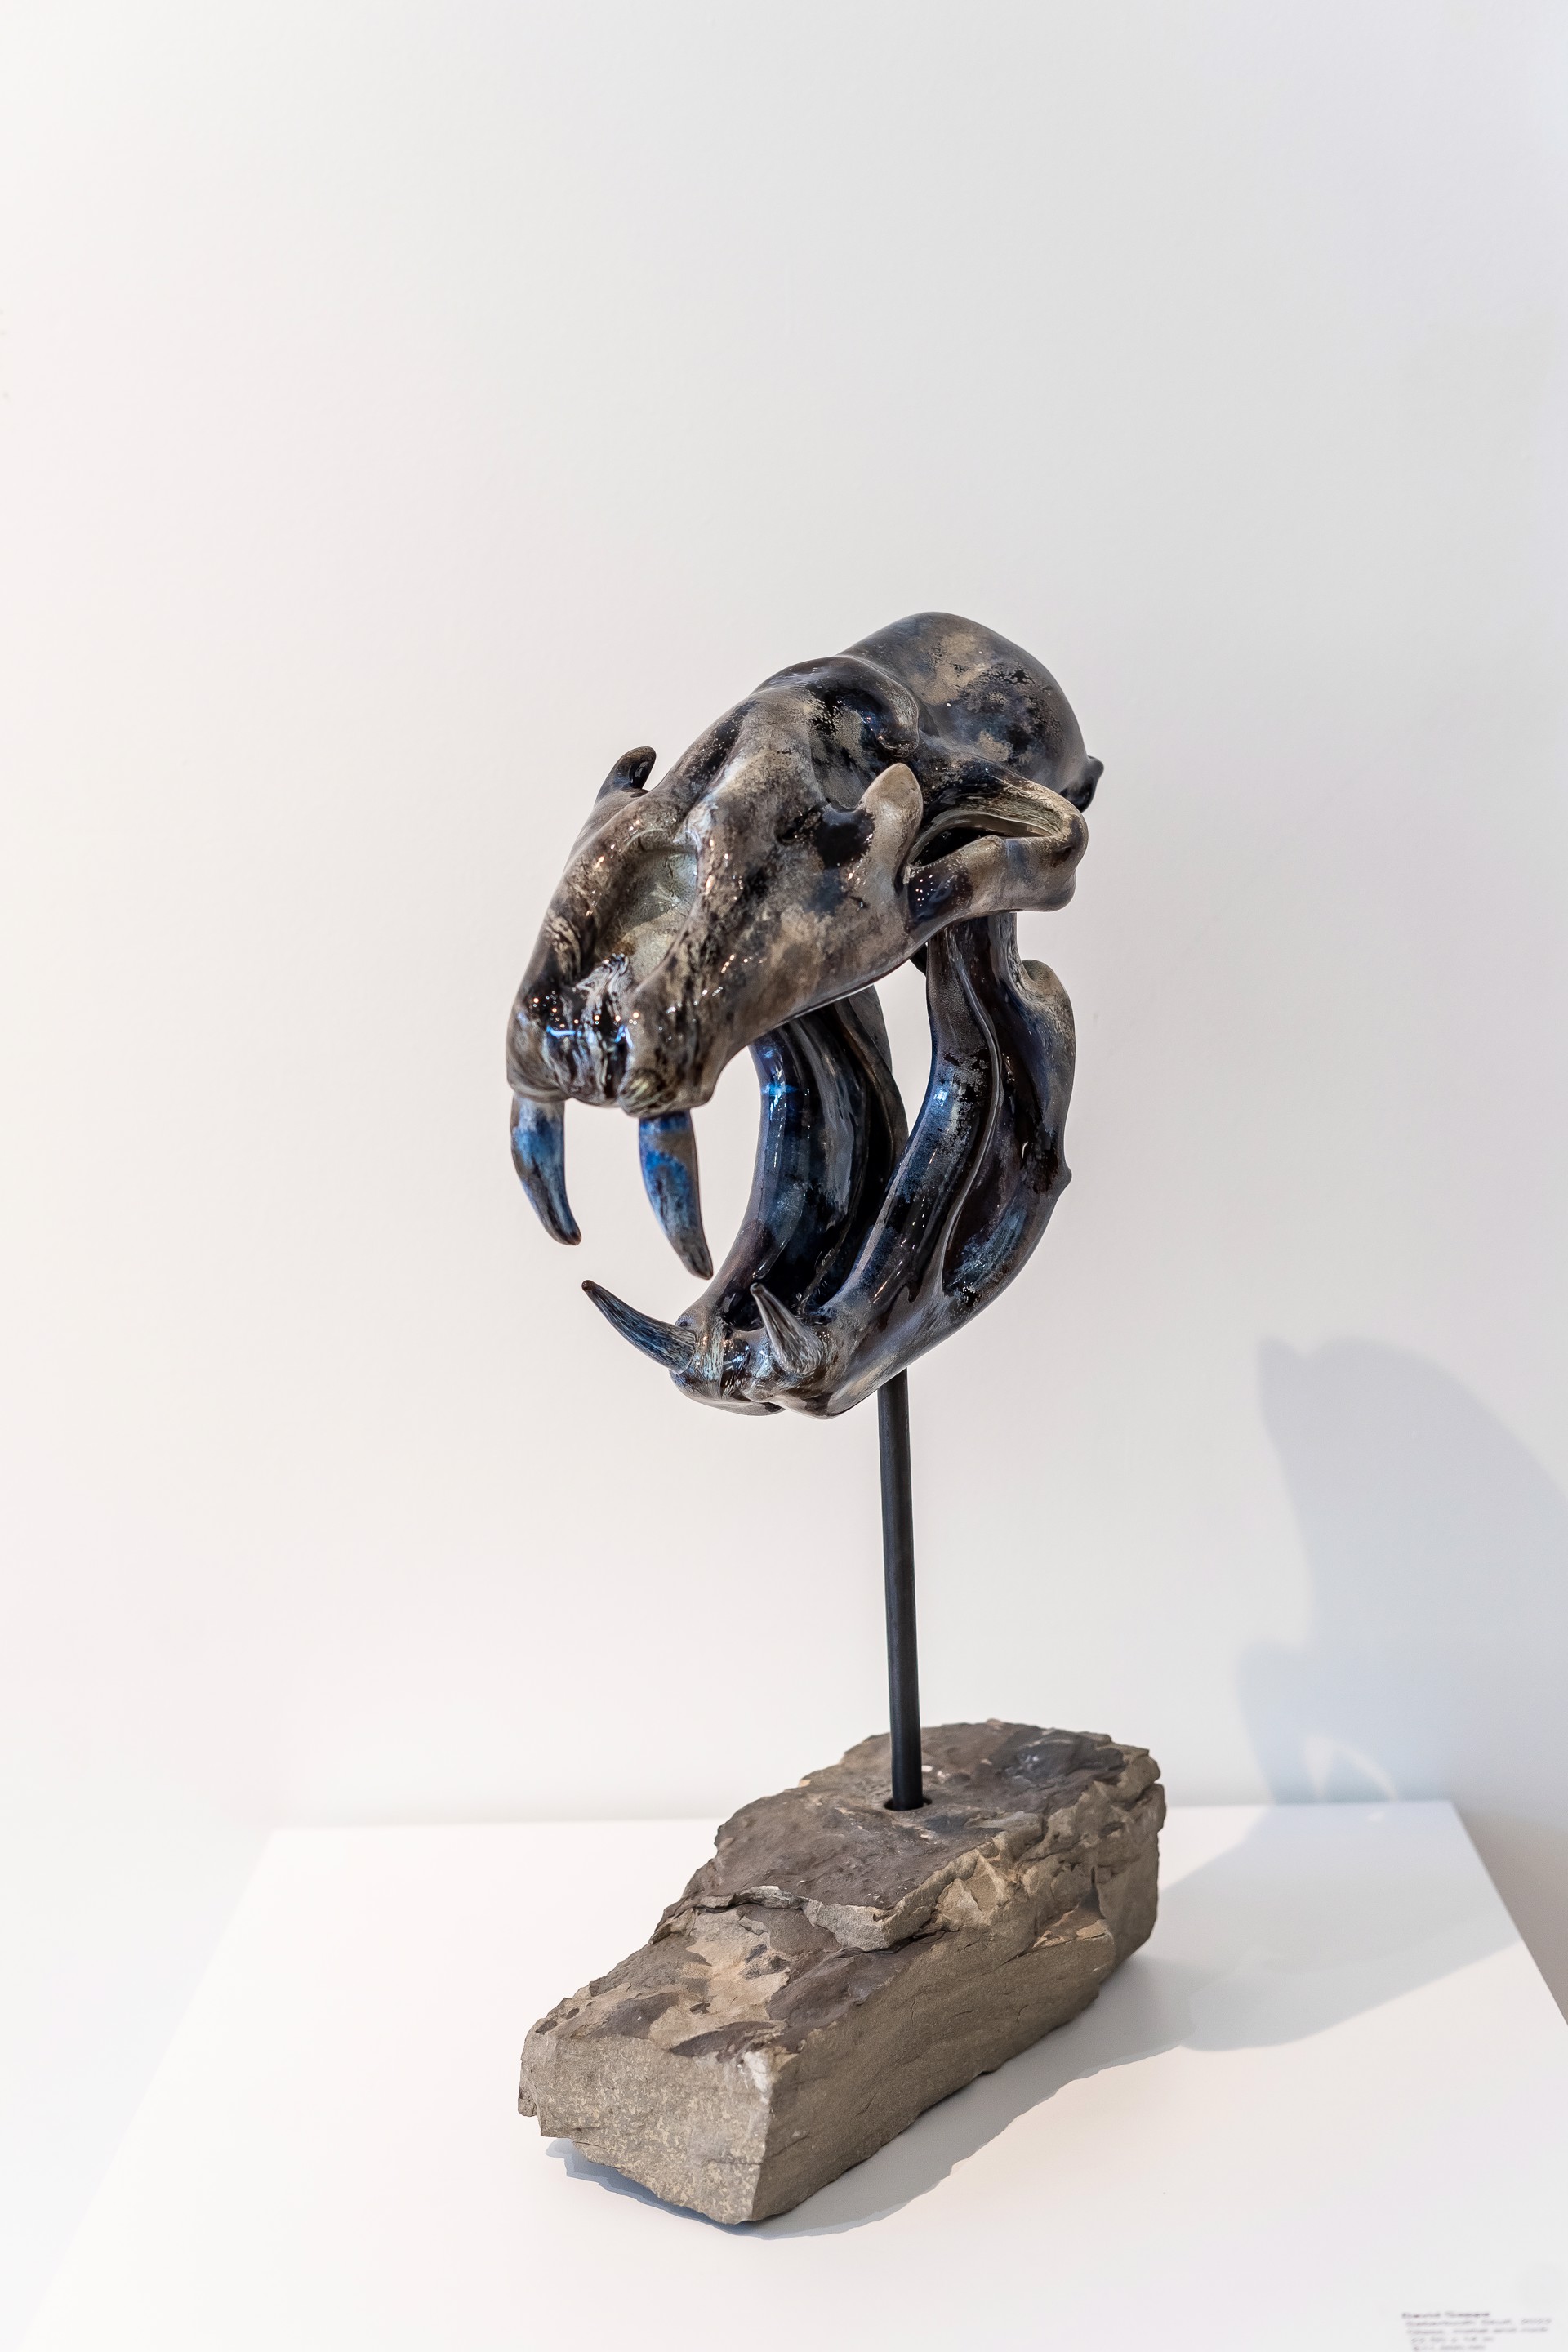 Sabertooth Skull by David Gappa